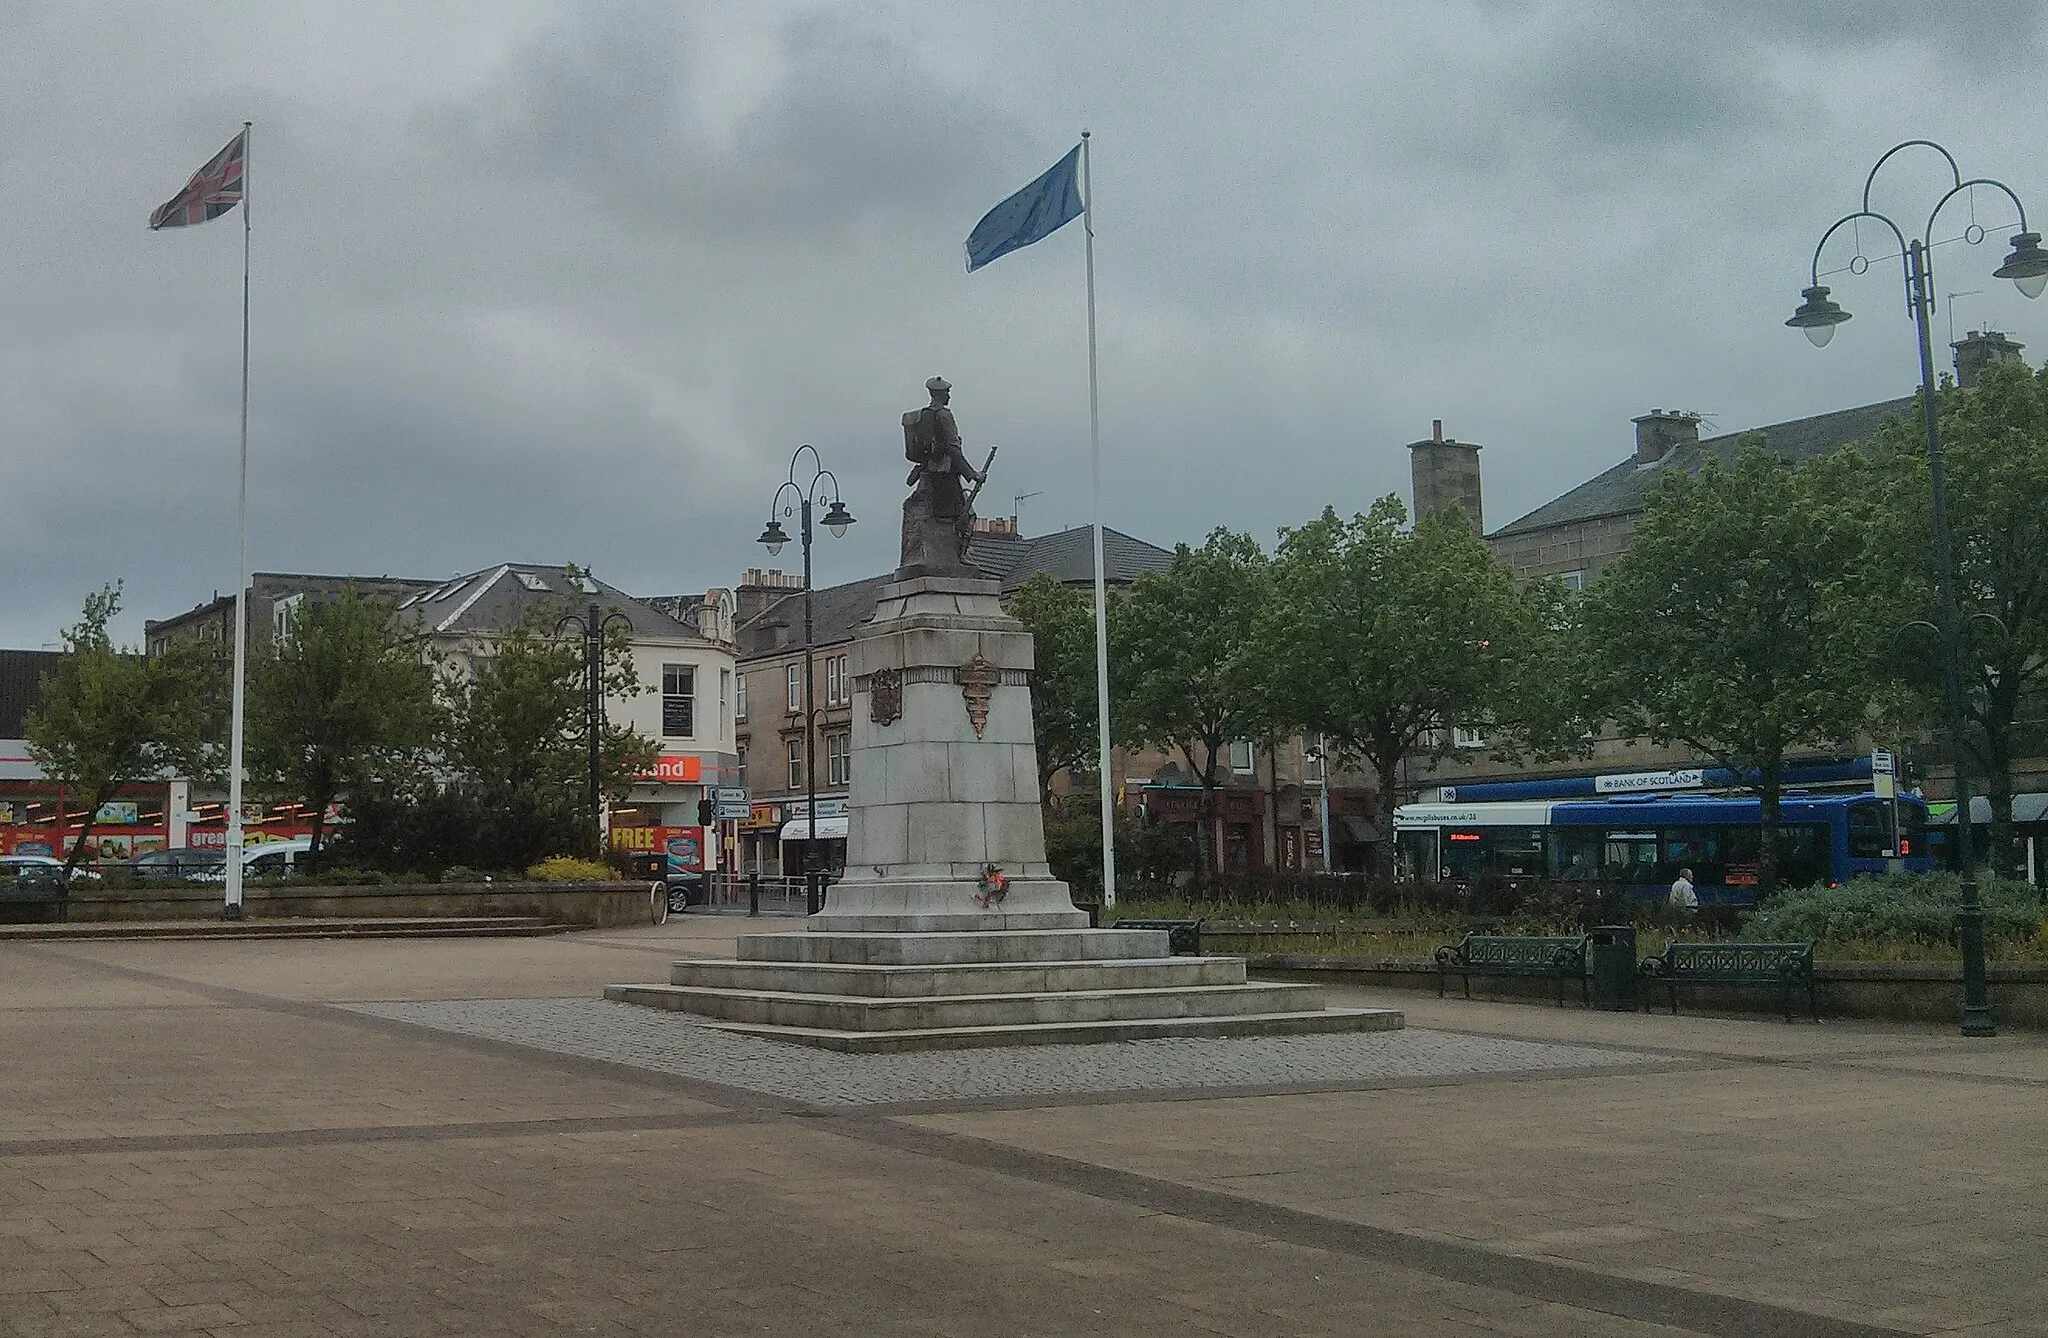 Photo showing: Houstoun Square, Johnstone, Renfreshire, showing the war memorial